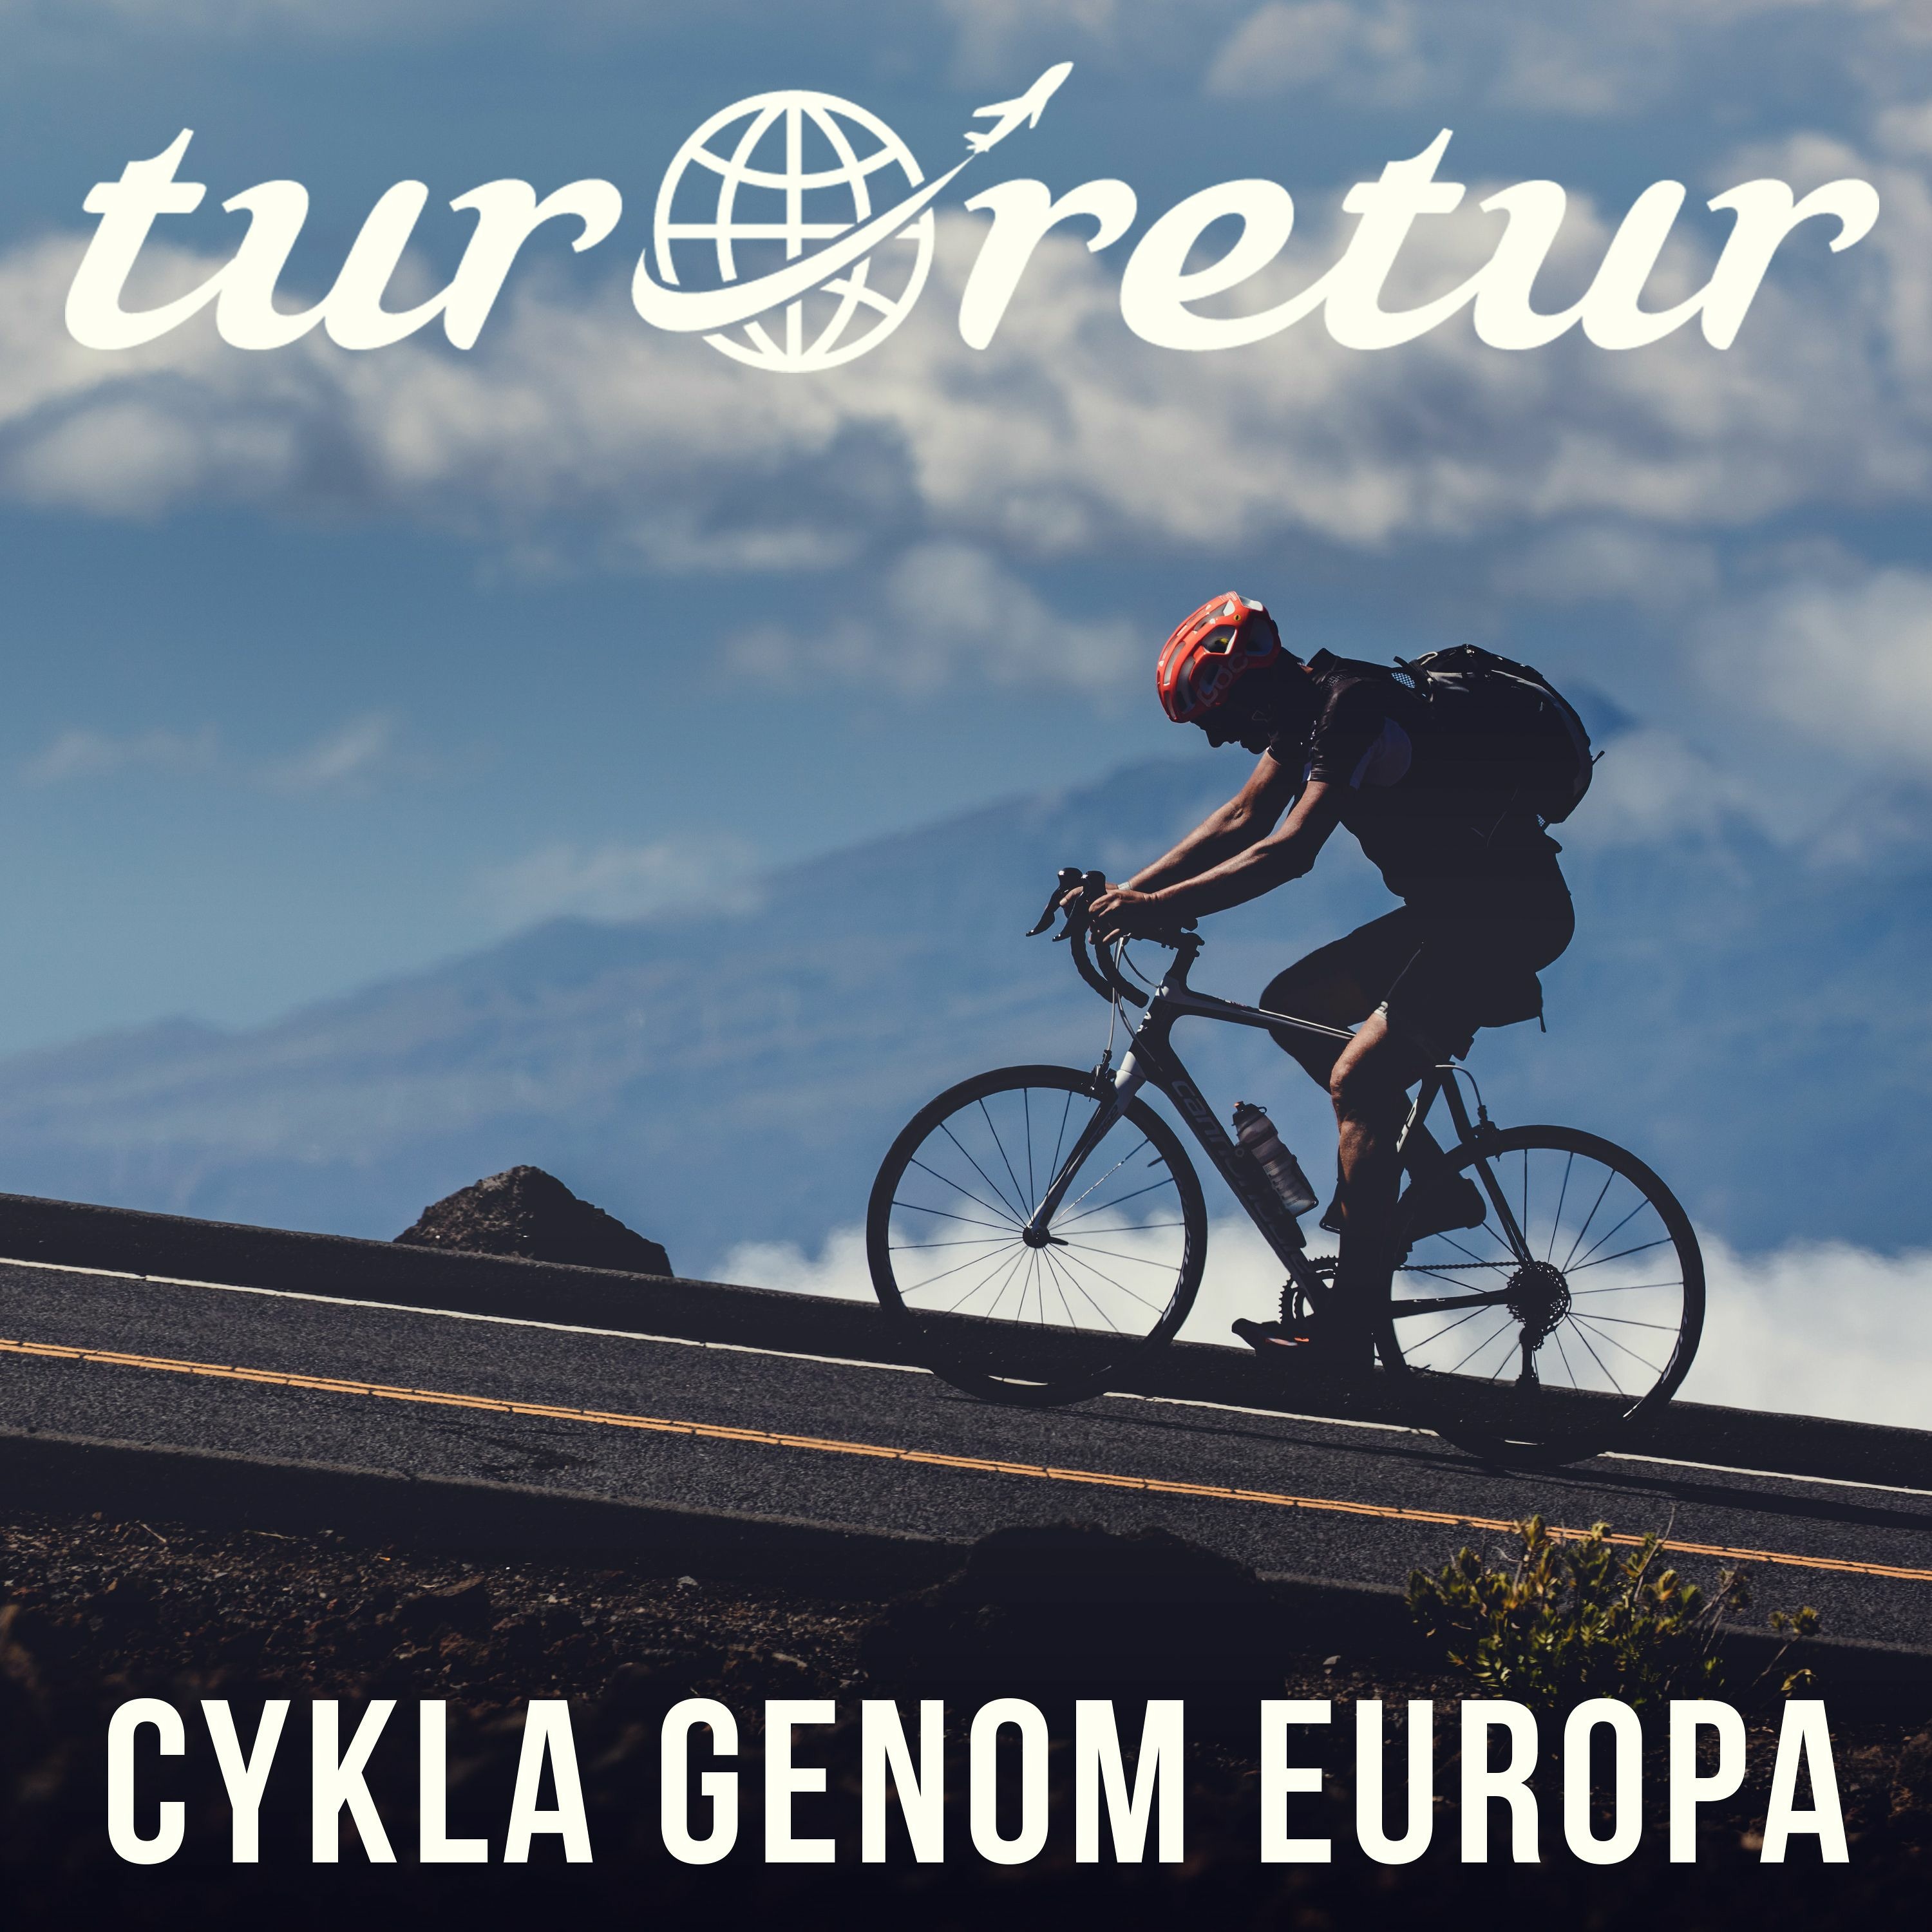 Cykla genom Europa